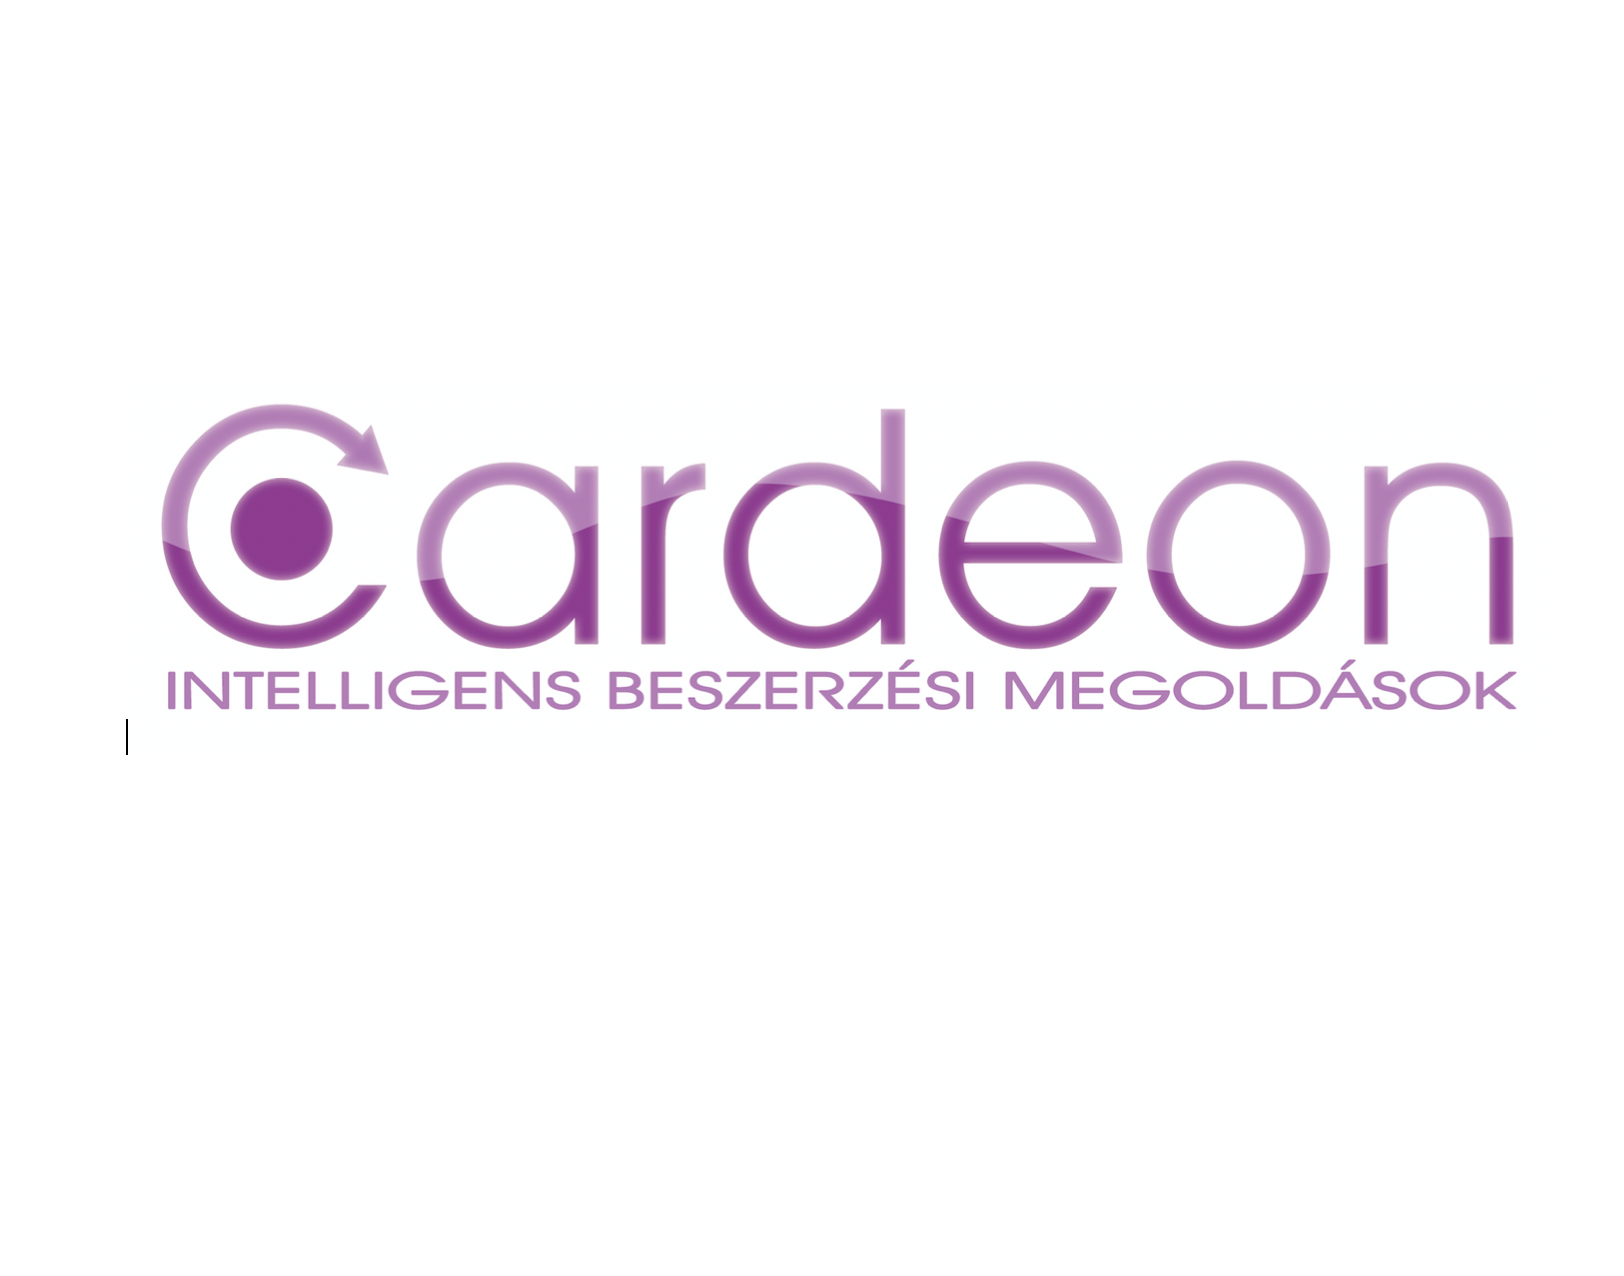 Cardeon Magyarország